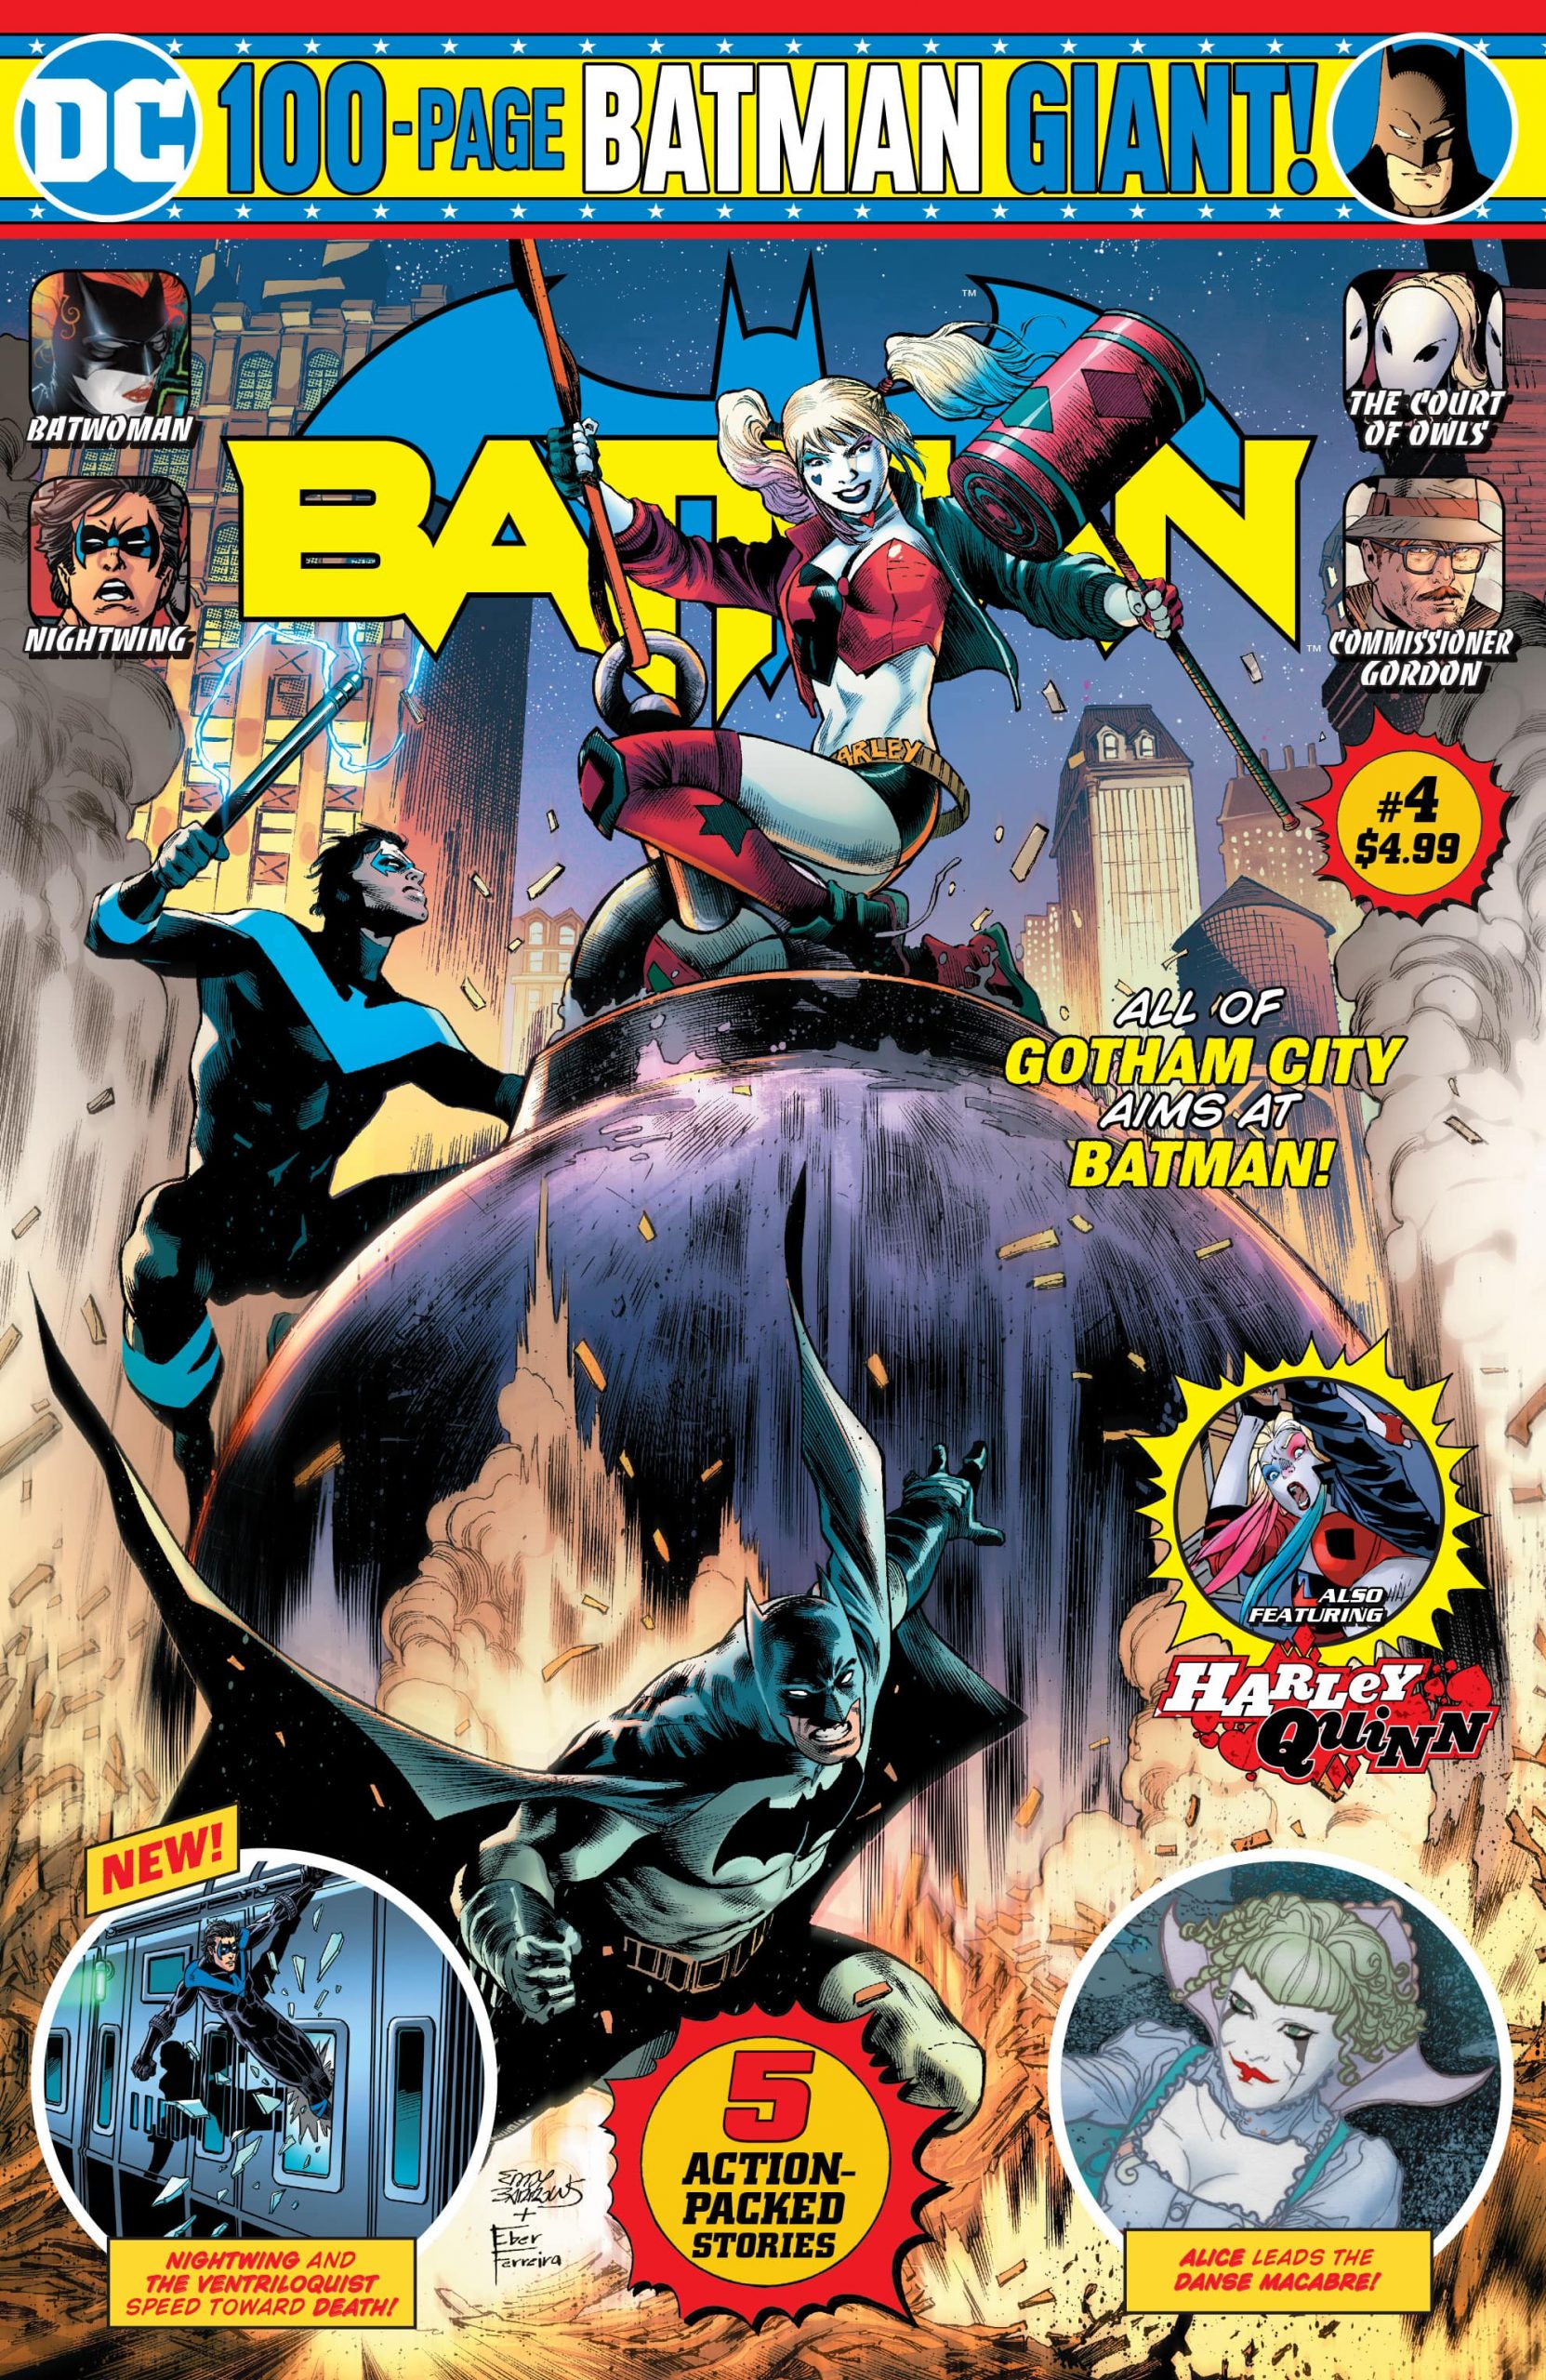 DC Preview: Batman Giant #4